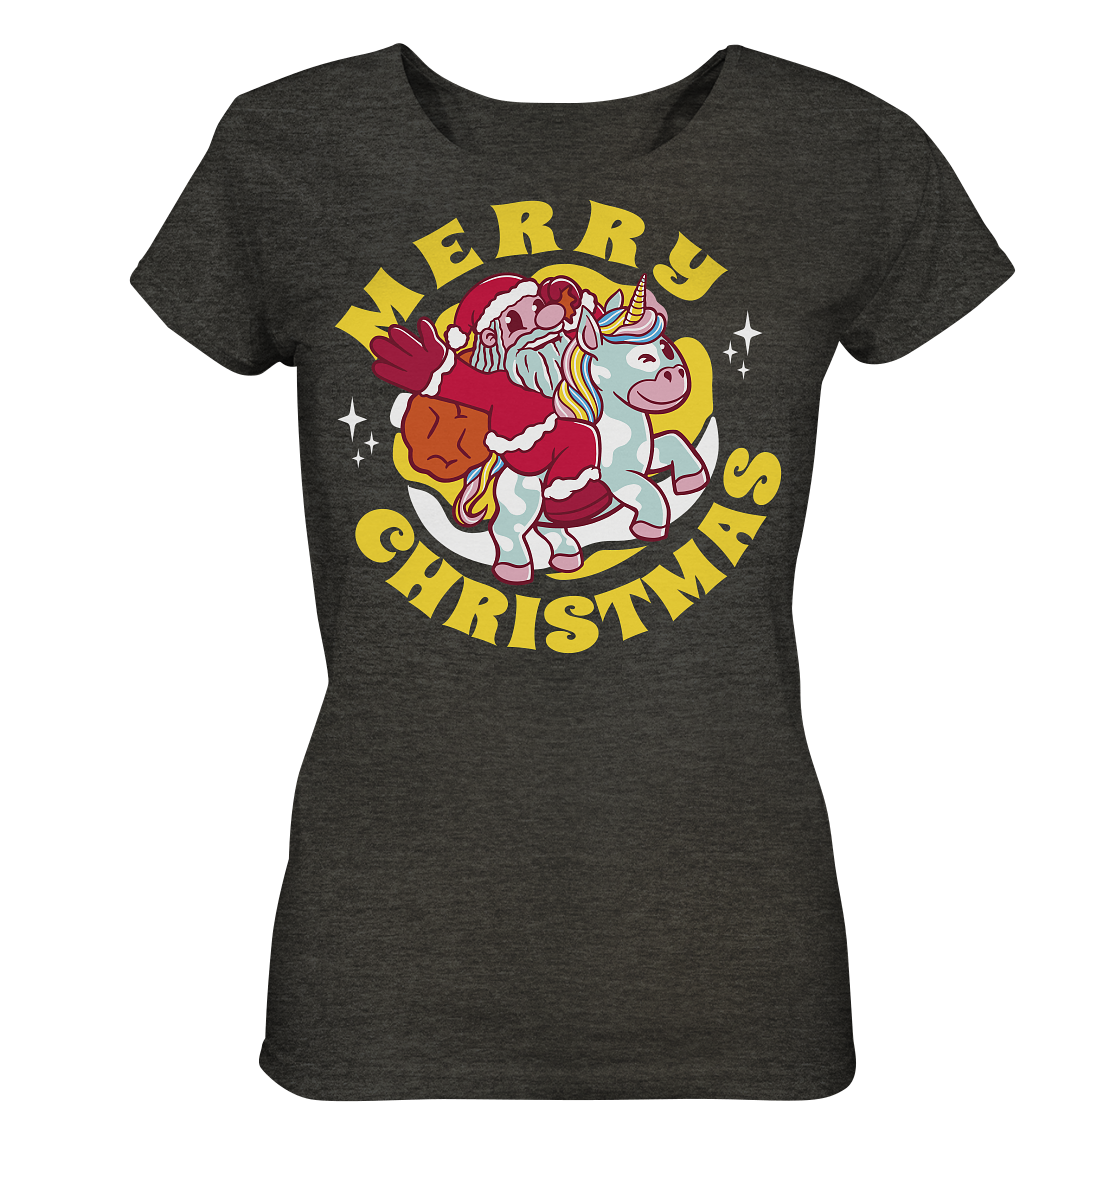 Riding Santa Claus, Merry Christmas, Merry Christmas - Ladies Organic Shirt (mottled)